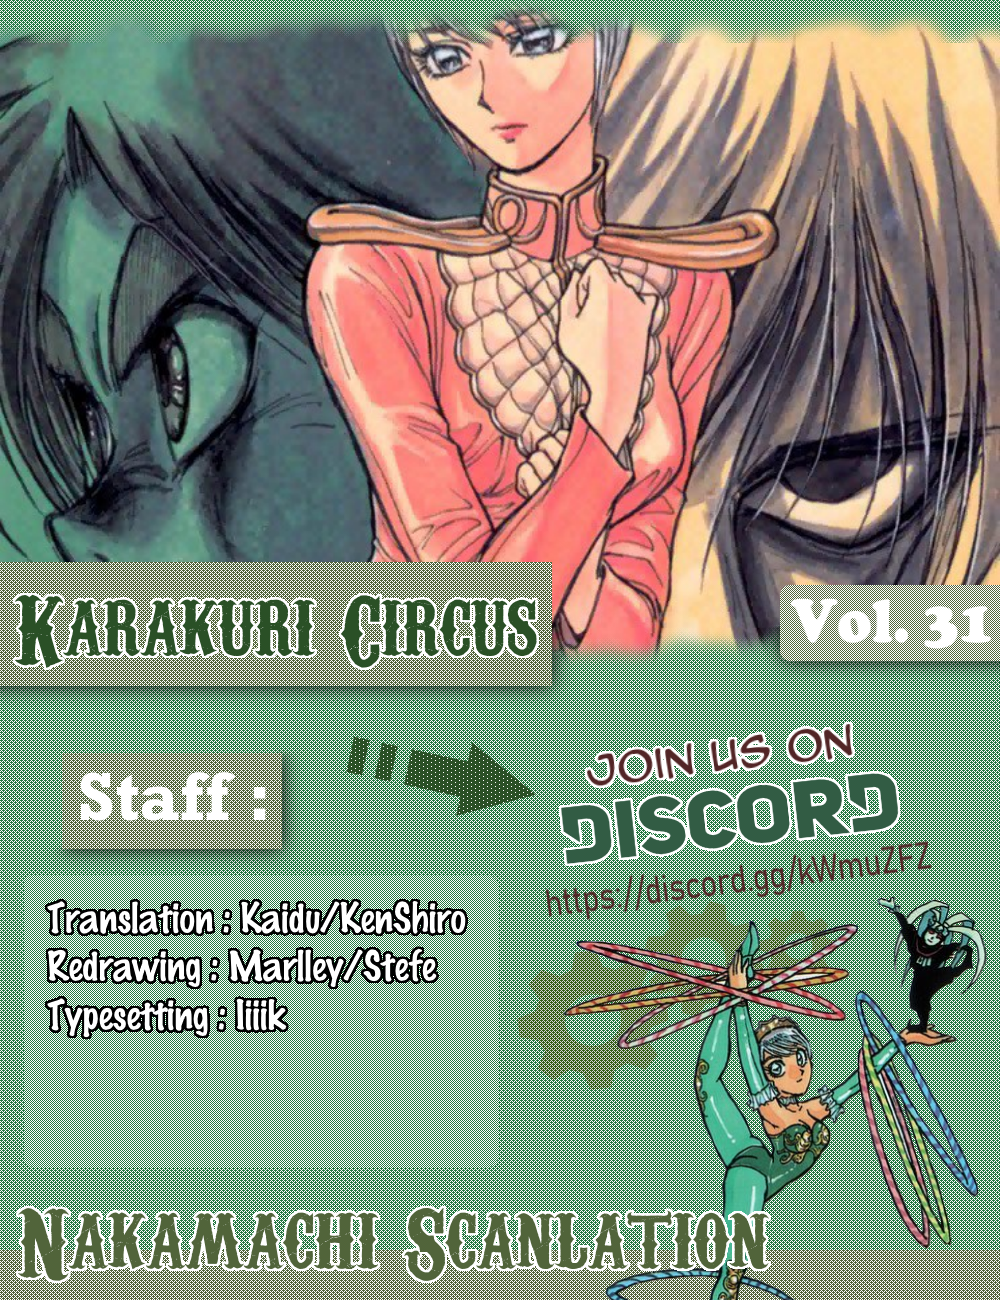 Karakuri Circus Chapter 298: Main Part - Welcome To The Kuroga Village - Act 16: Voice - Picture 2